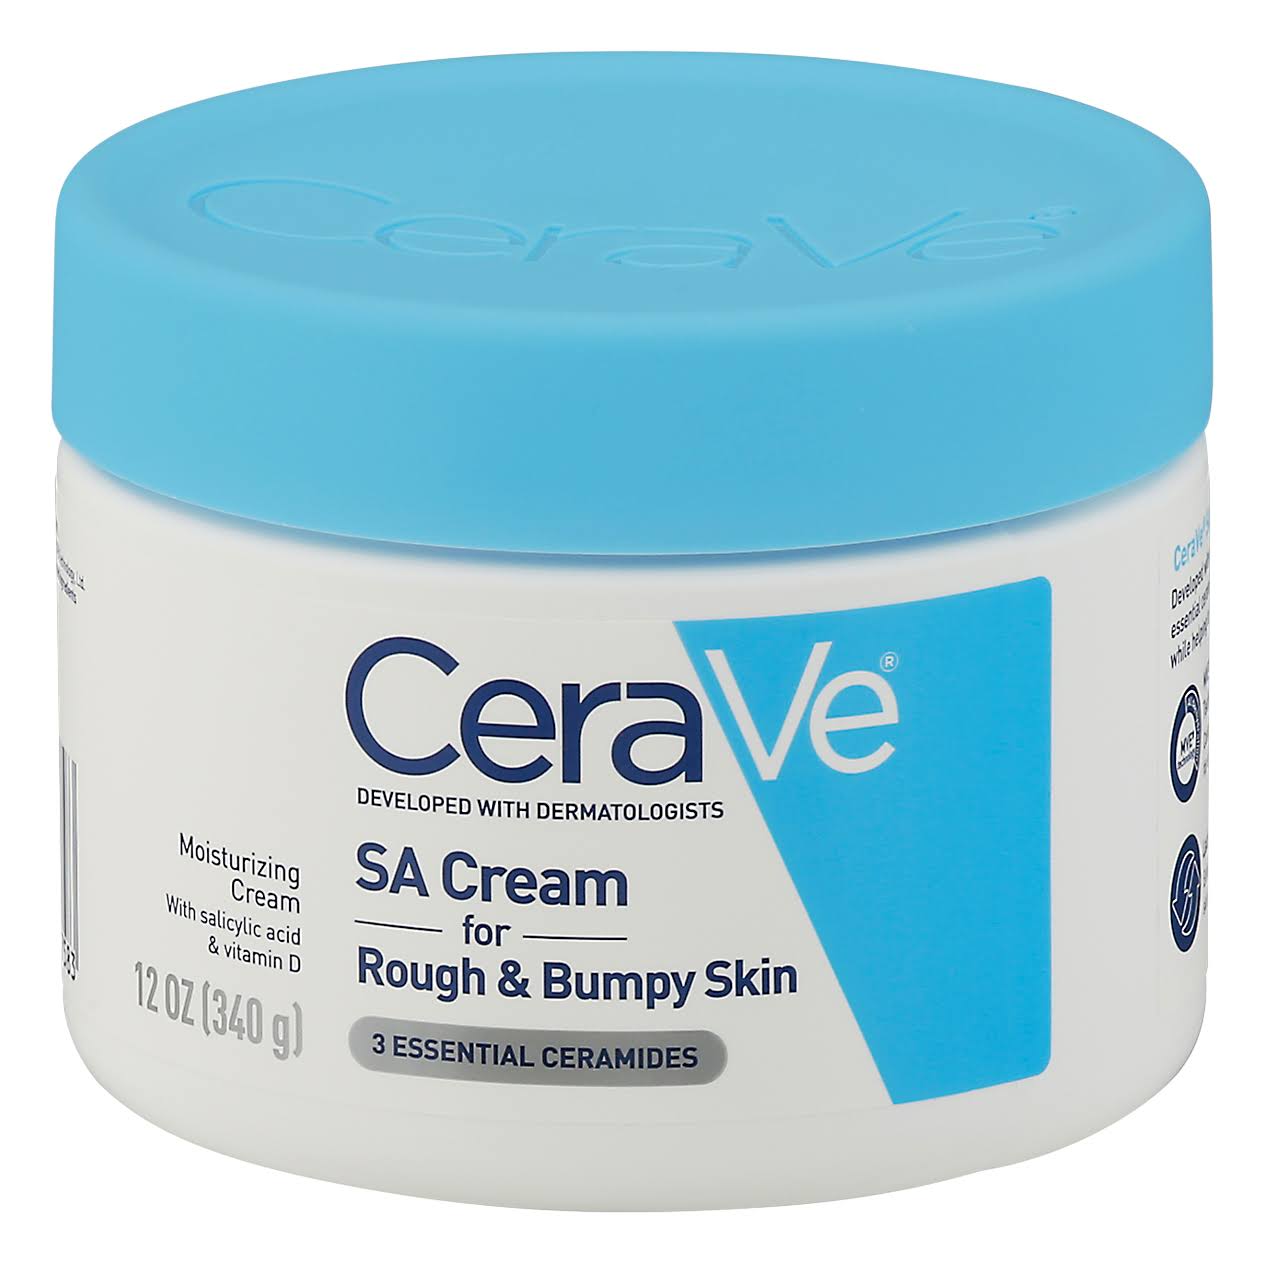 Cerave Cream for Rough and Bumpy Skin - 12oz